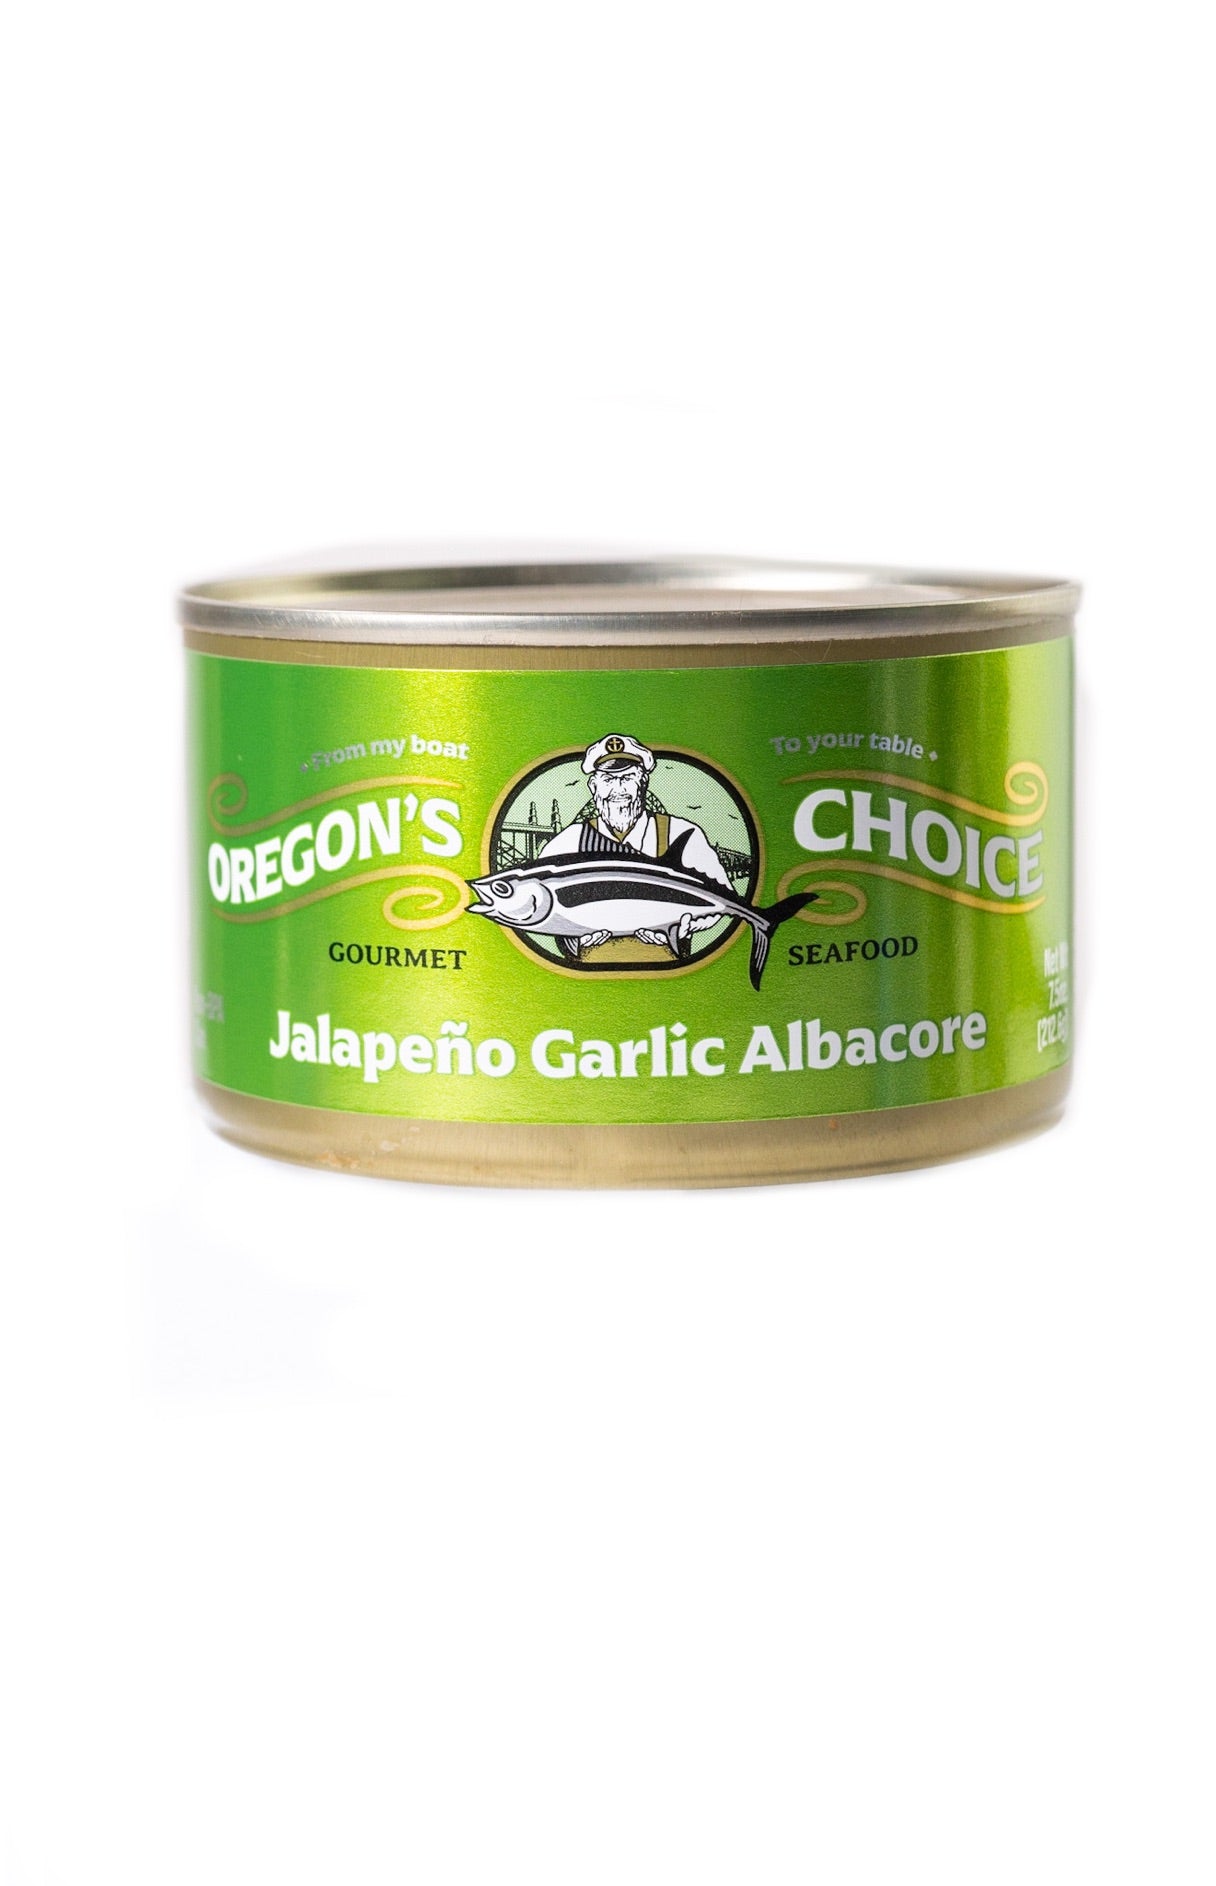 Jalapeño Garlic Albacore Tuna 7.5oz Can by Oregon's Choice – MadeHere